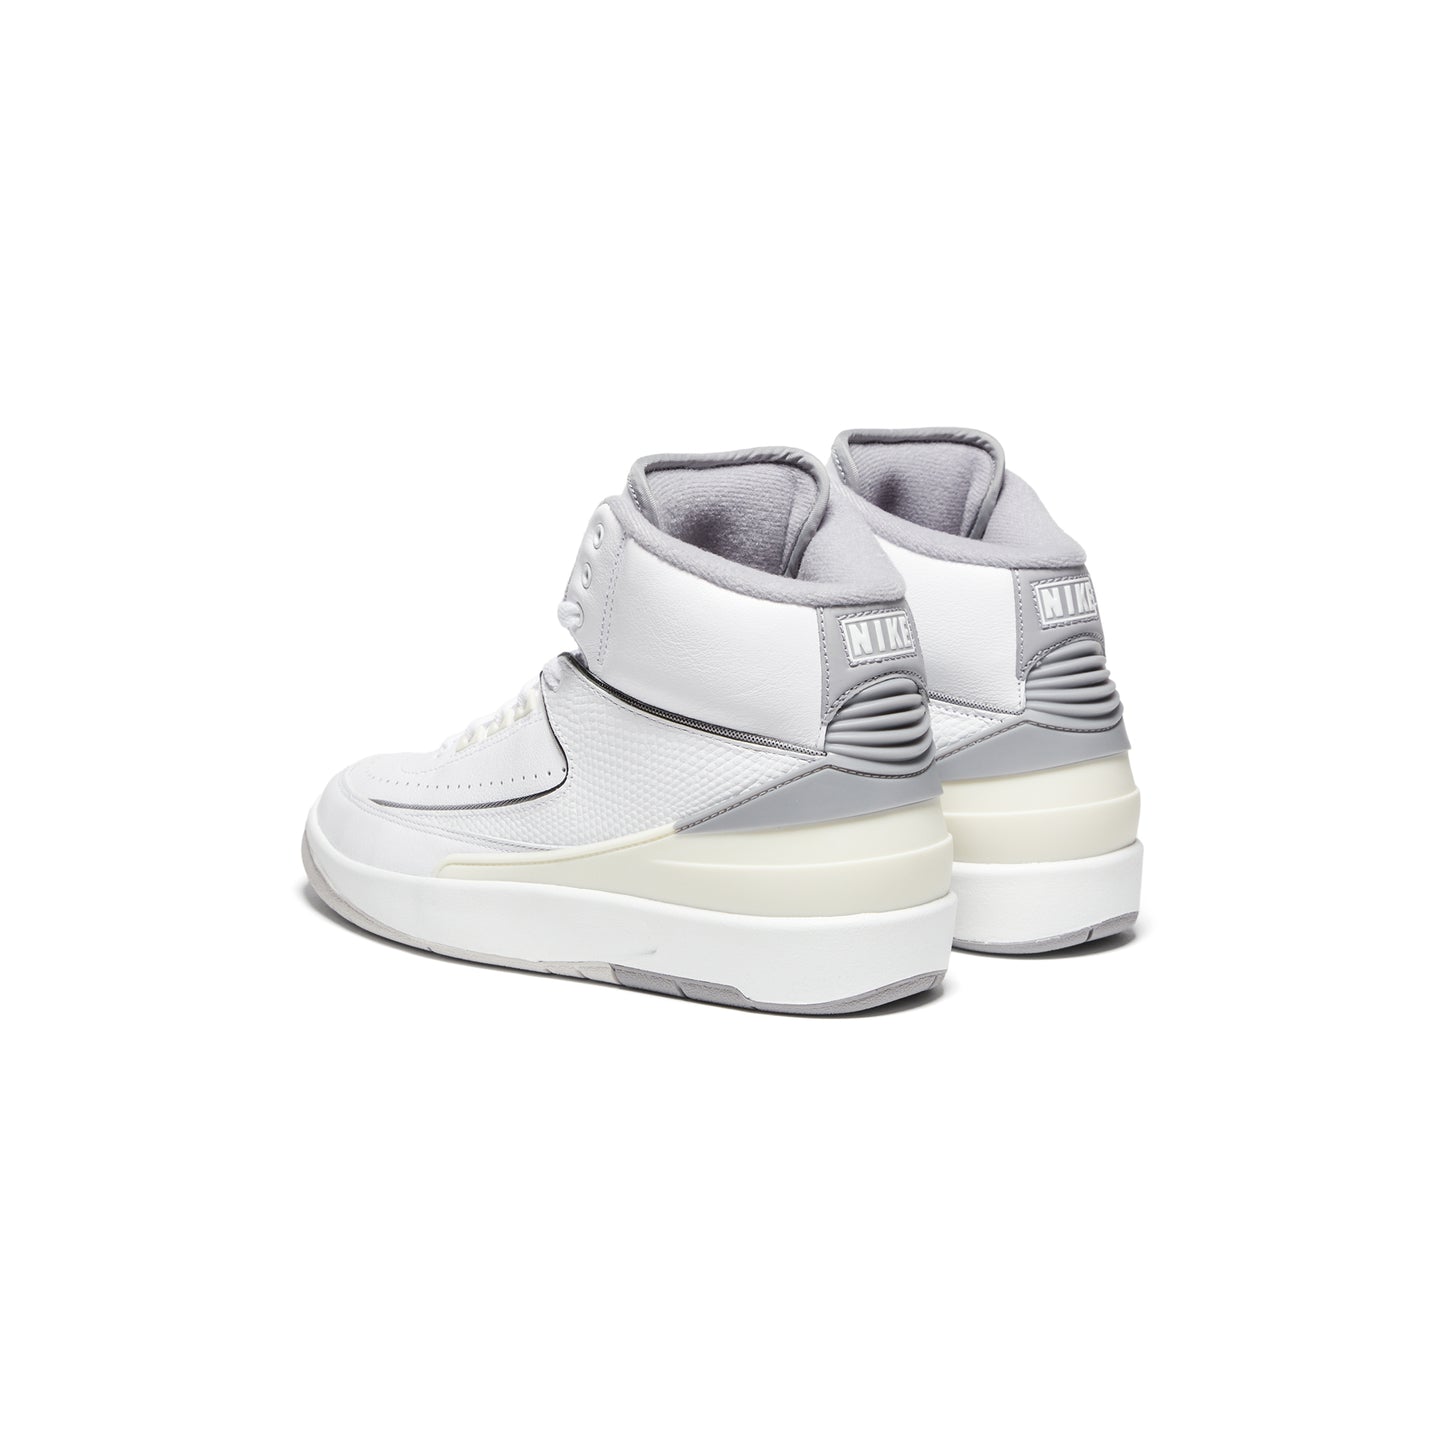 Nike Kids Air Jordan 2 Retro (White/Cement Grey/Sail/Black)